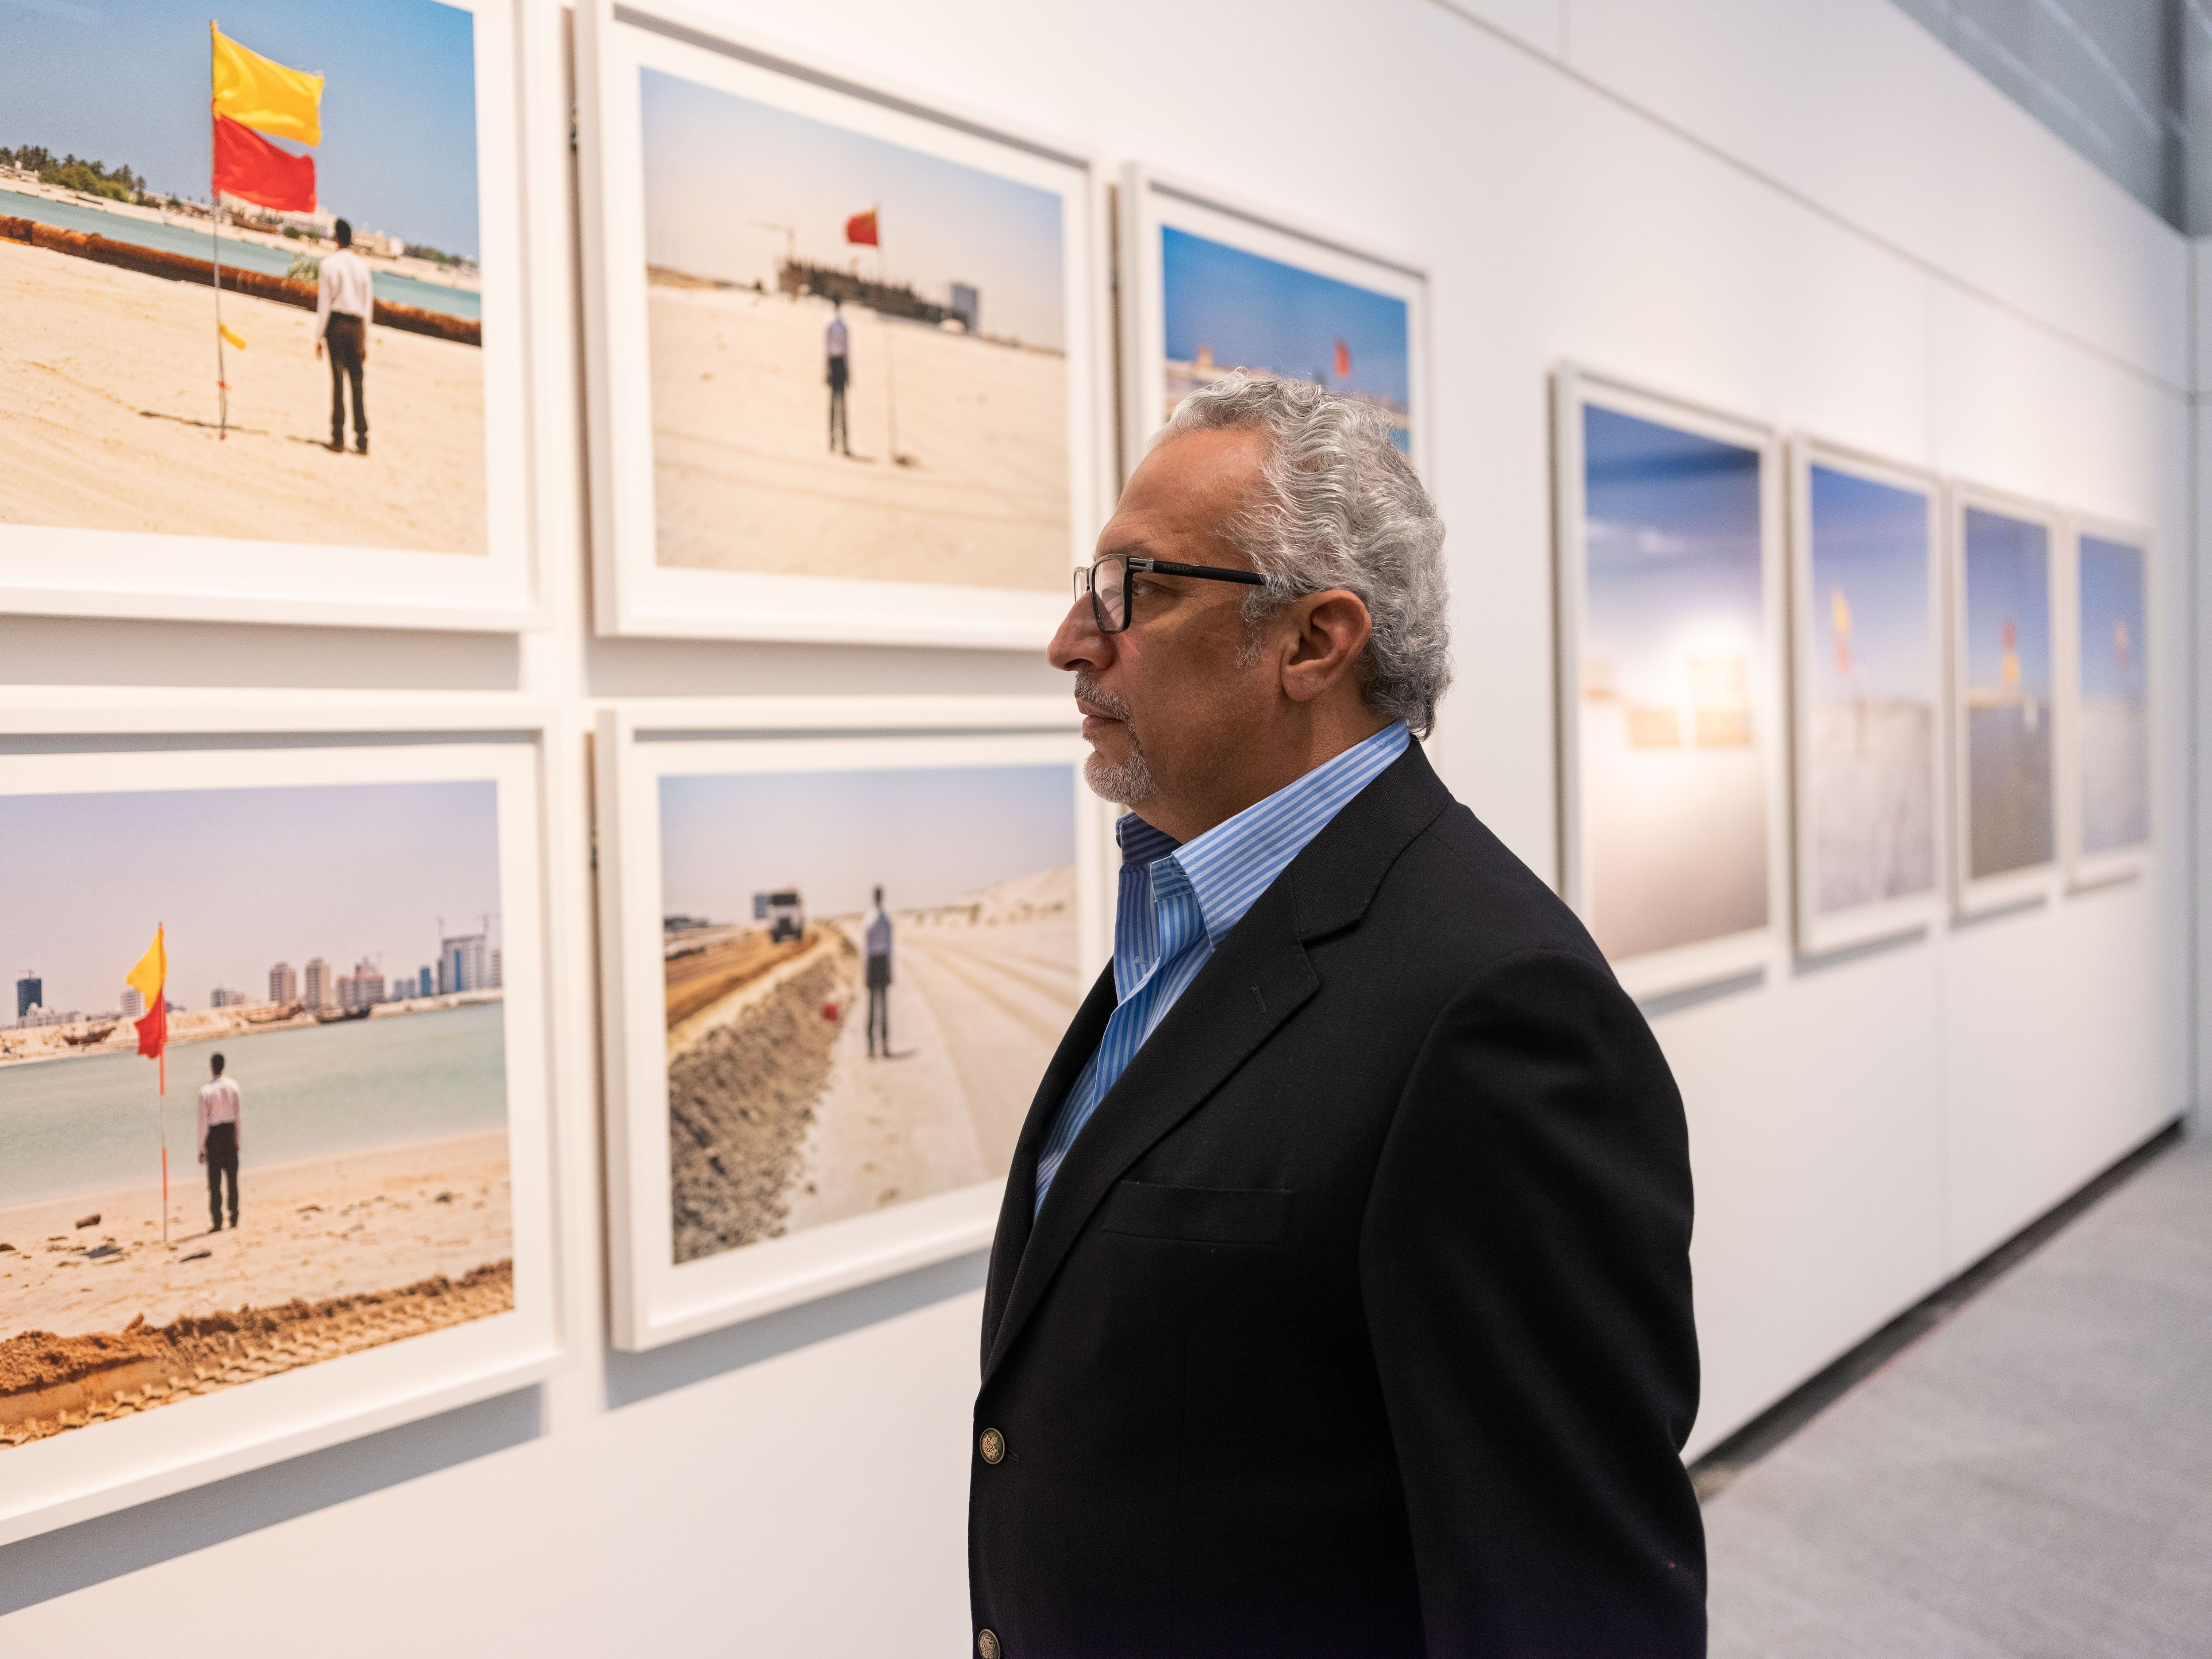 artist Mohammed Kazem demonstrates on the speedy increase of the country’s art scene